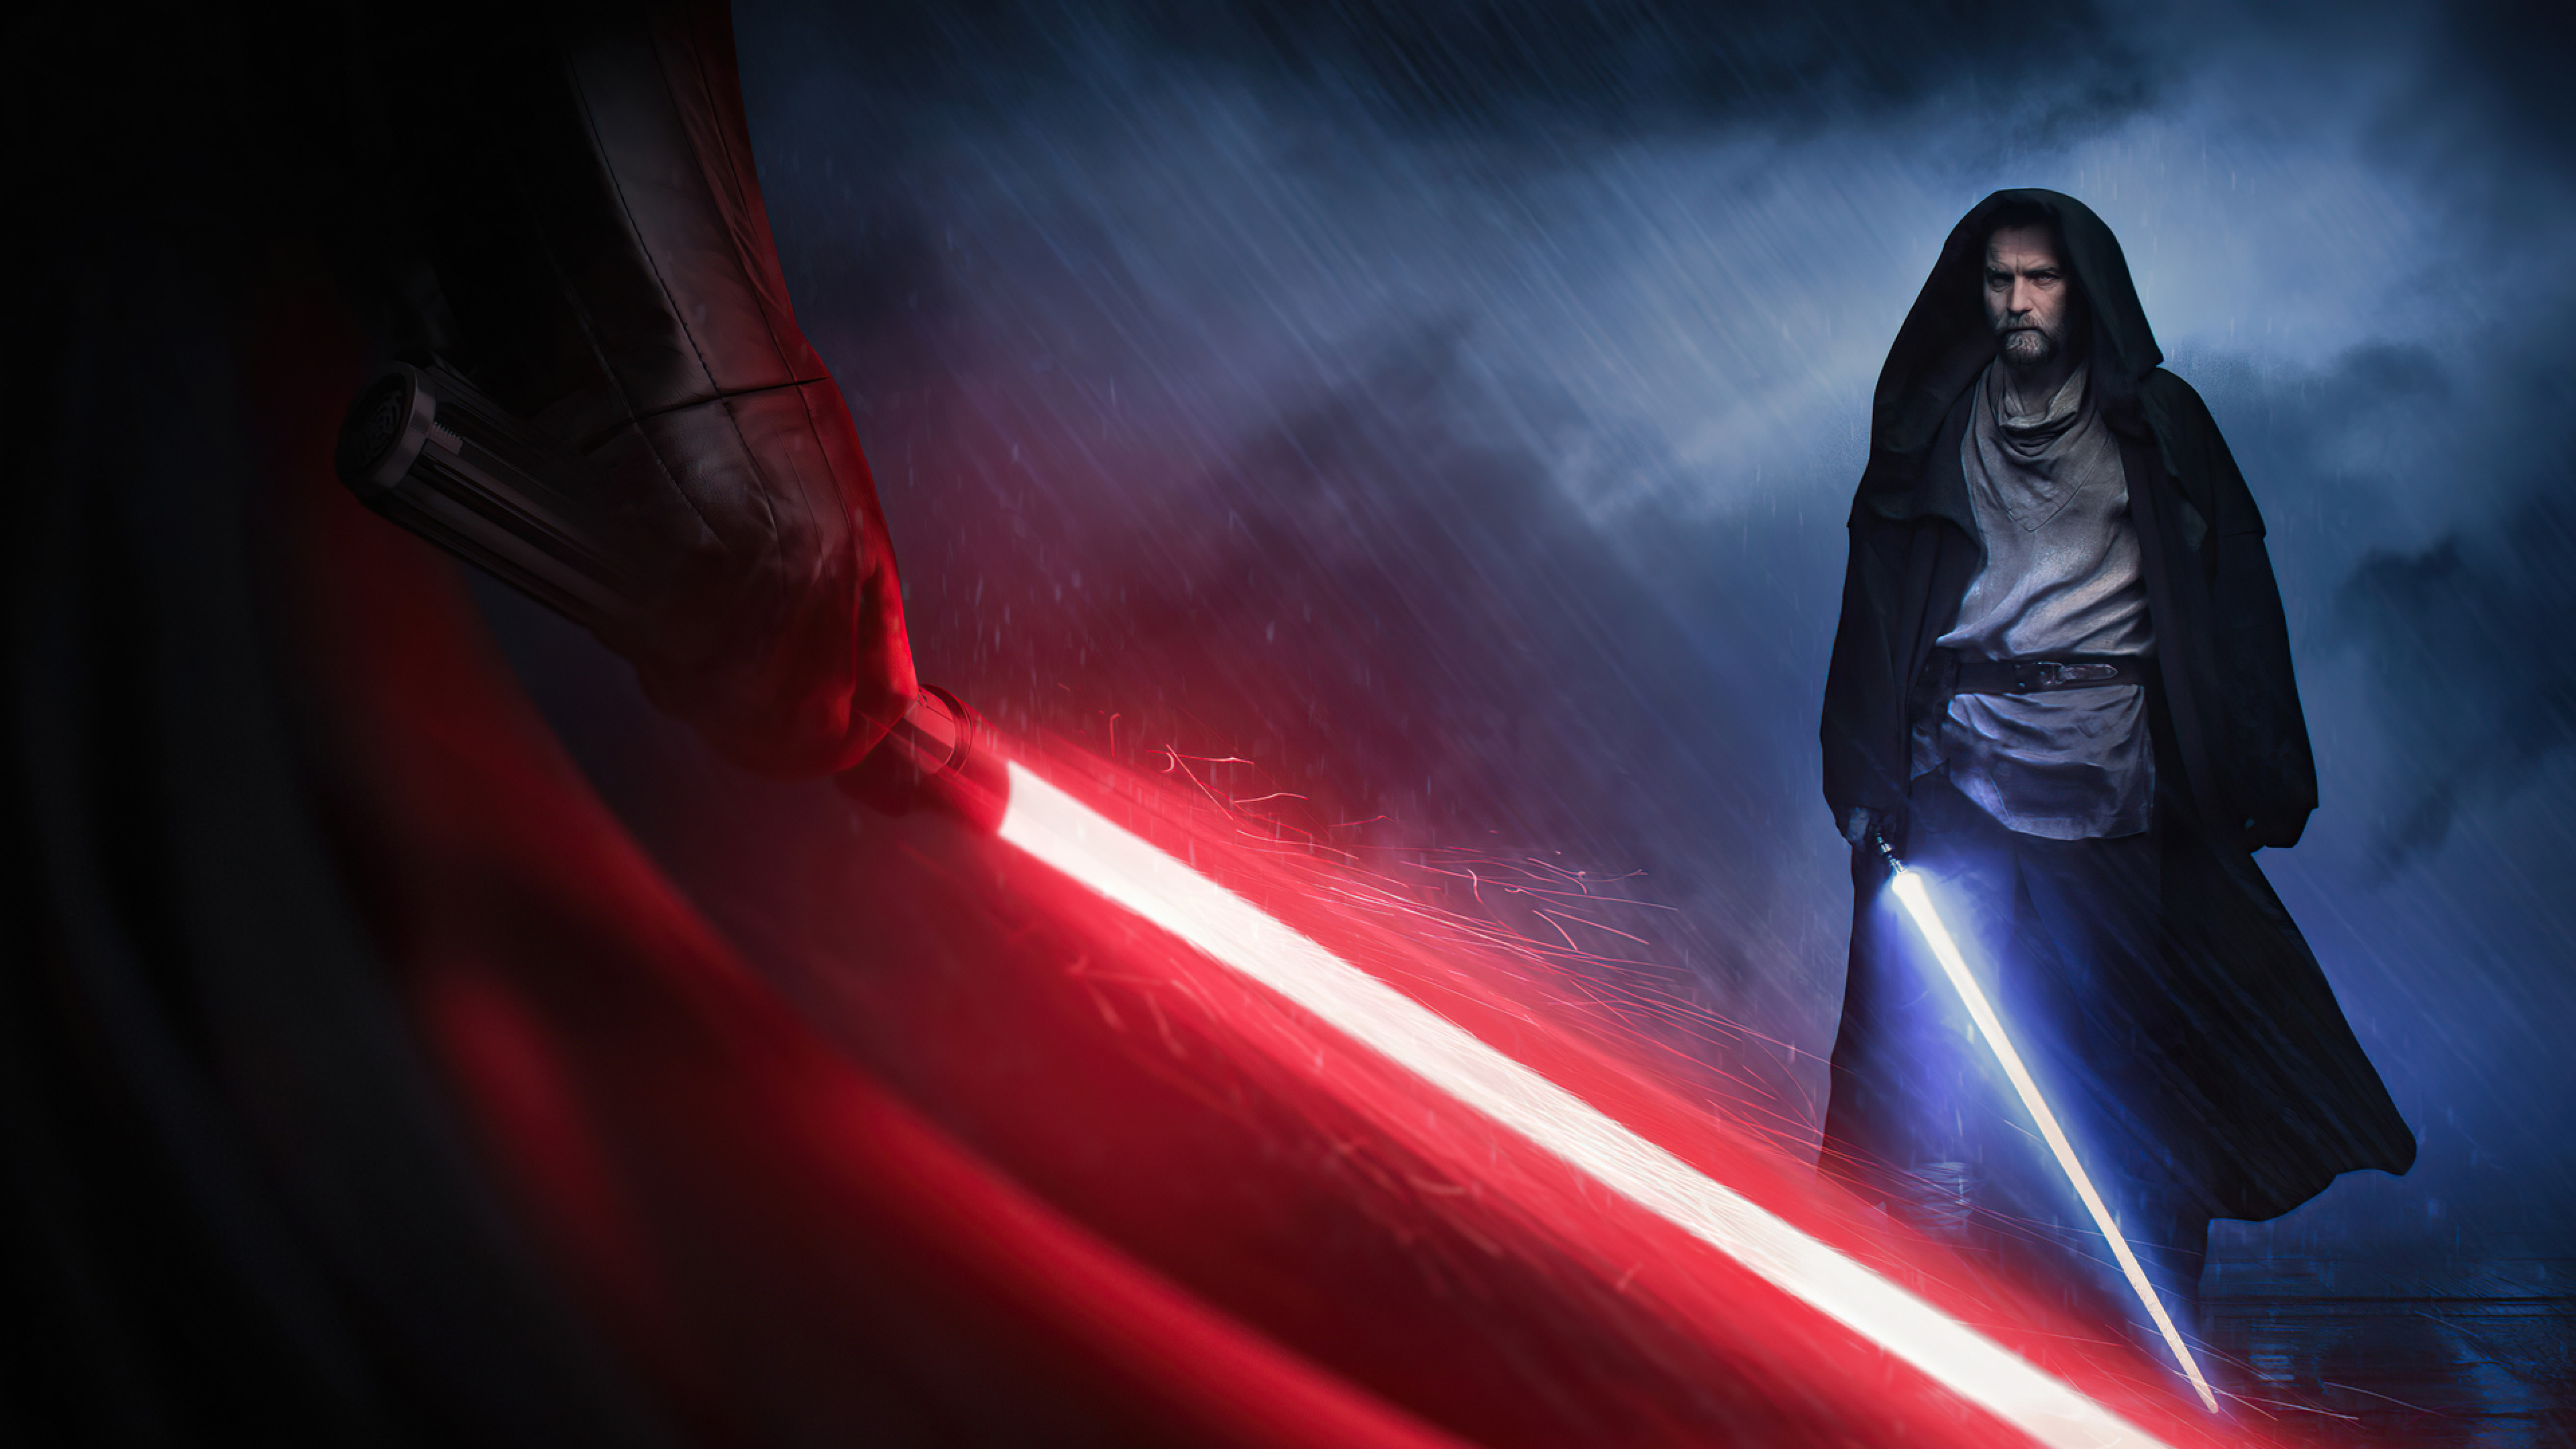 3840x2160 Darth Vader Vs Obi Wan Kenobi HD Cool Star Wars 4K Wallpaper, HD  TV Series 4K Wallpapers, Images, Photos and Background - Wallpapers Den